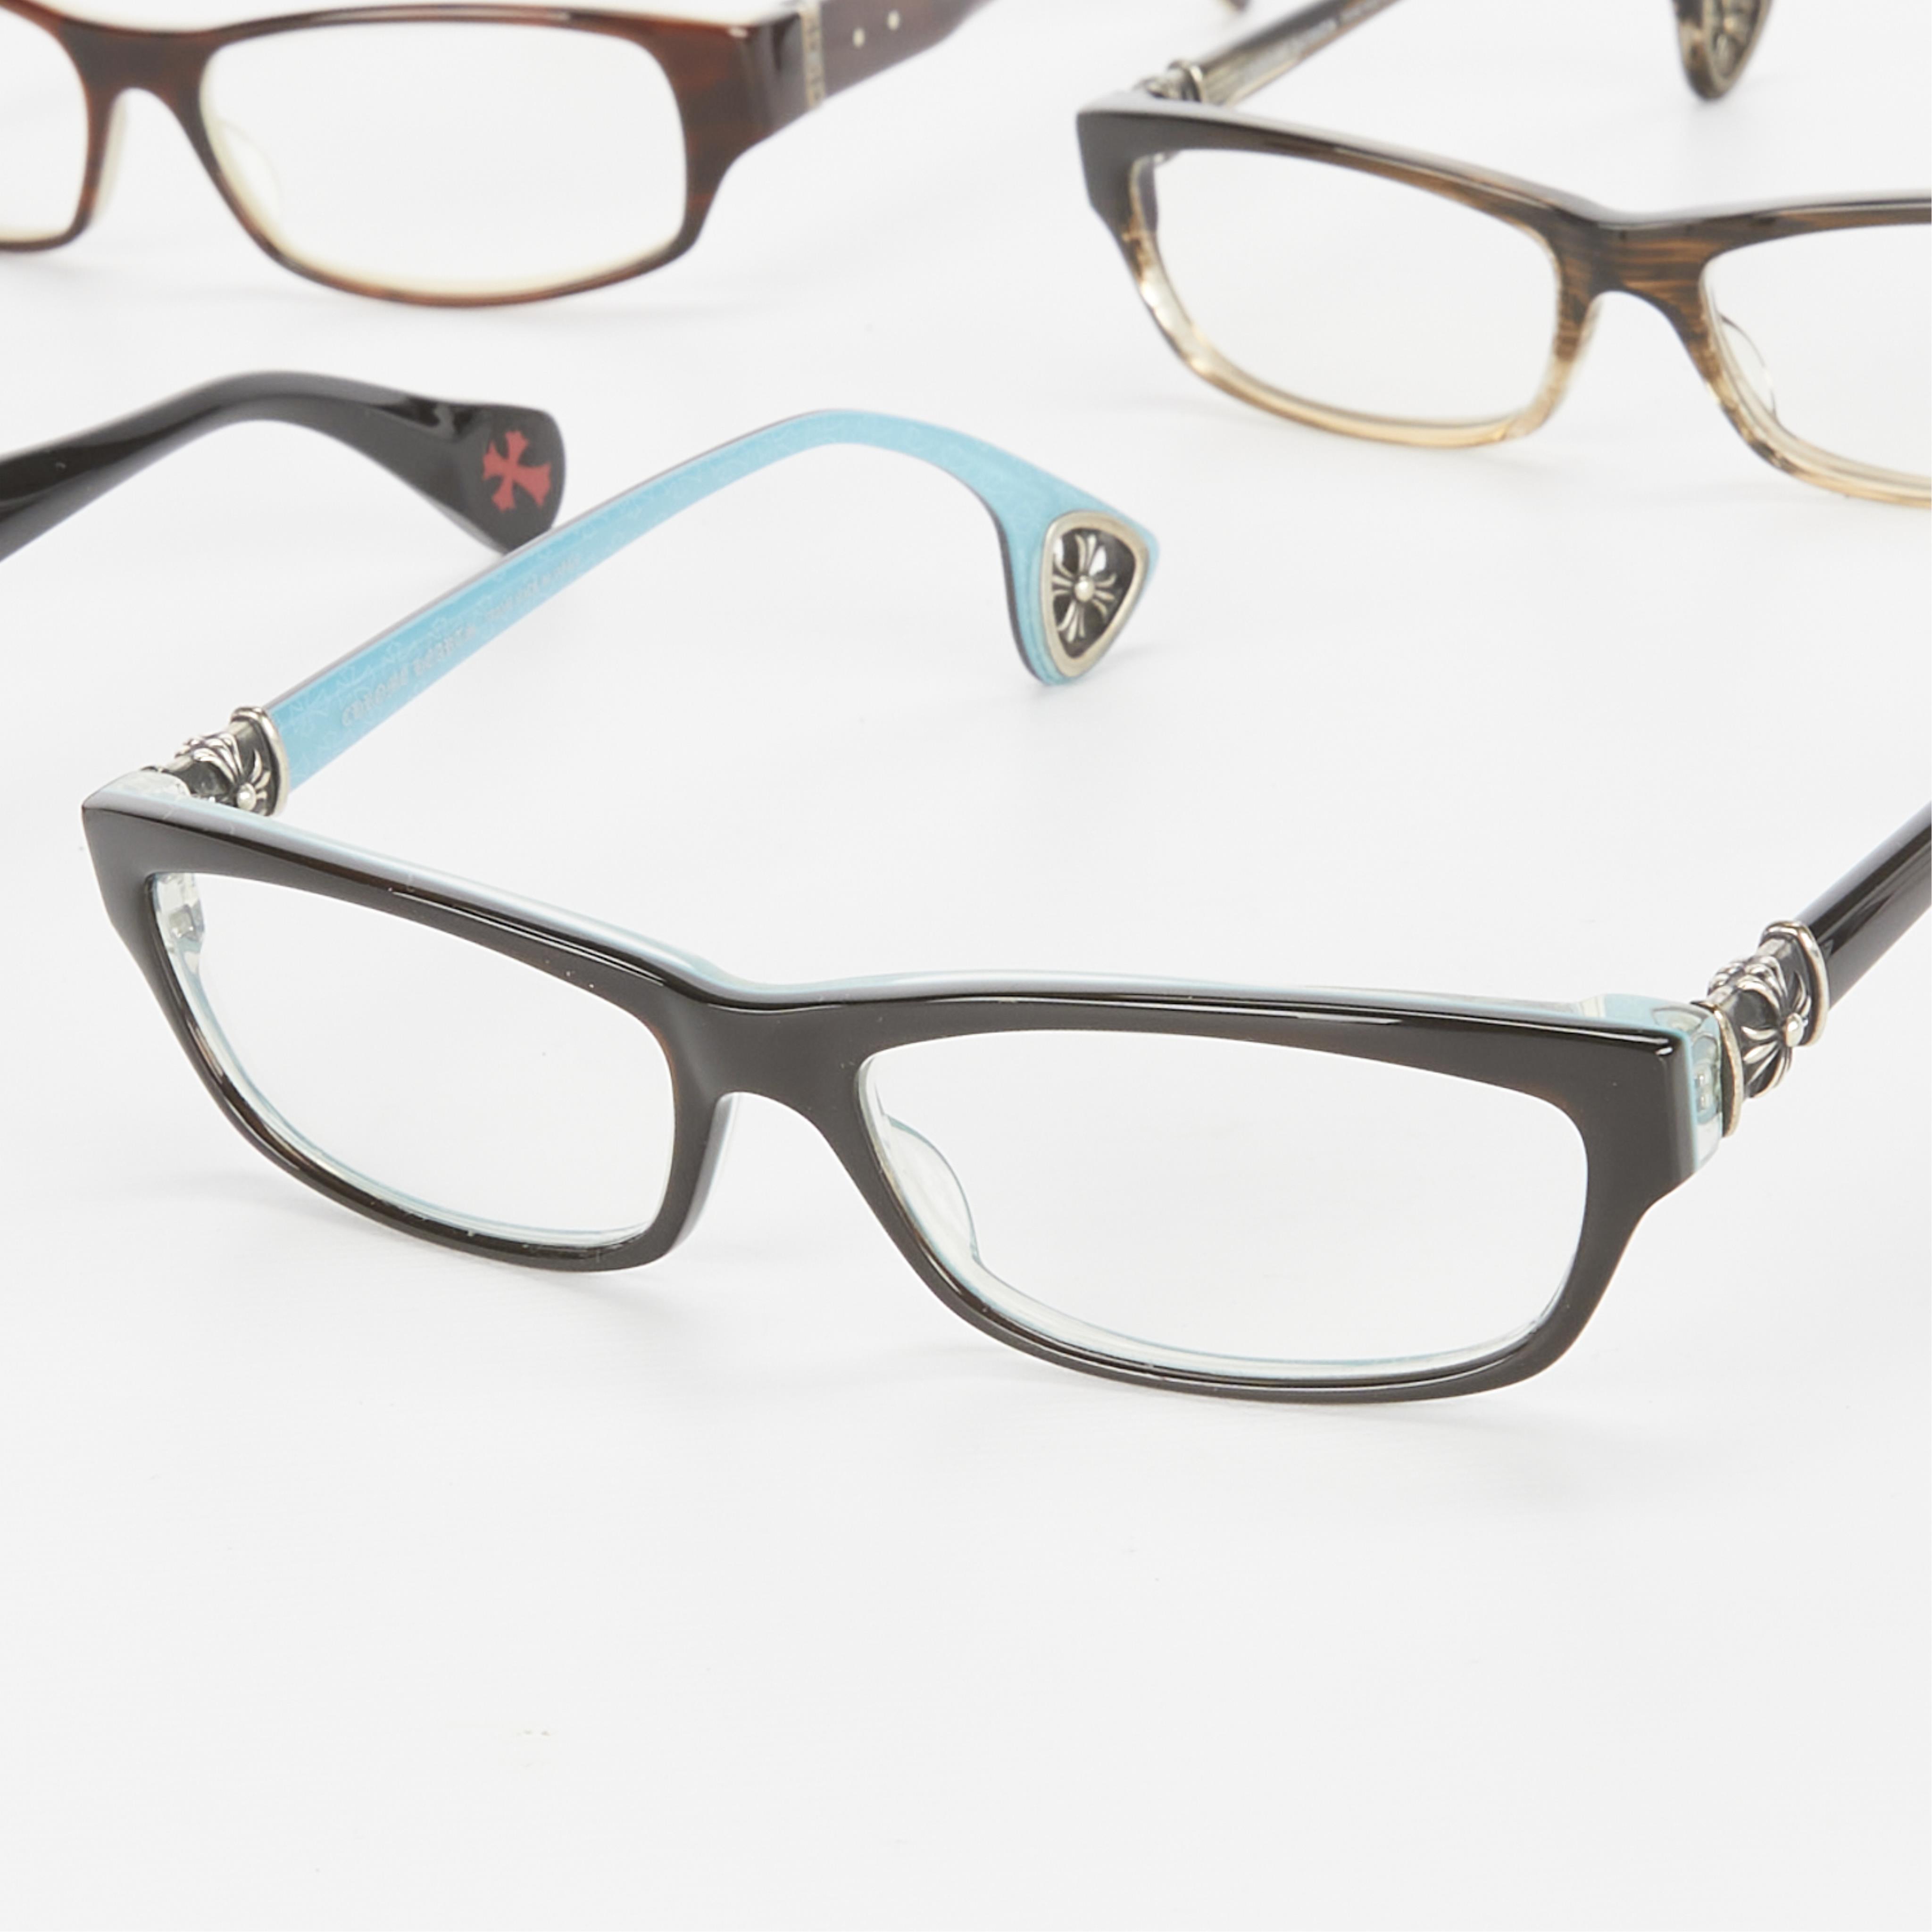 Grp of 6 Chrome Hearts Eyeglasses - Image 6 of 12